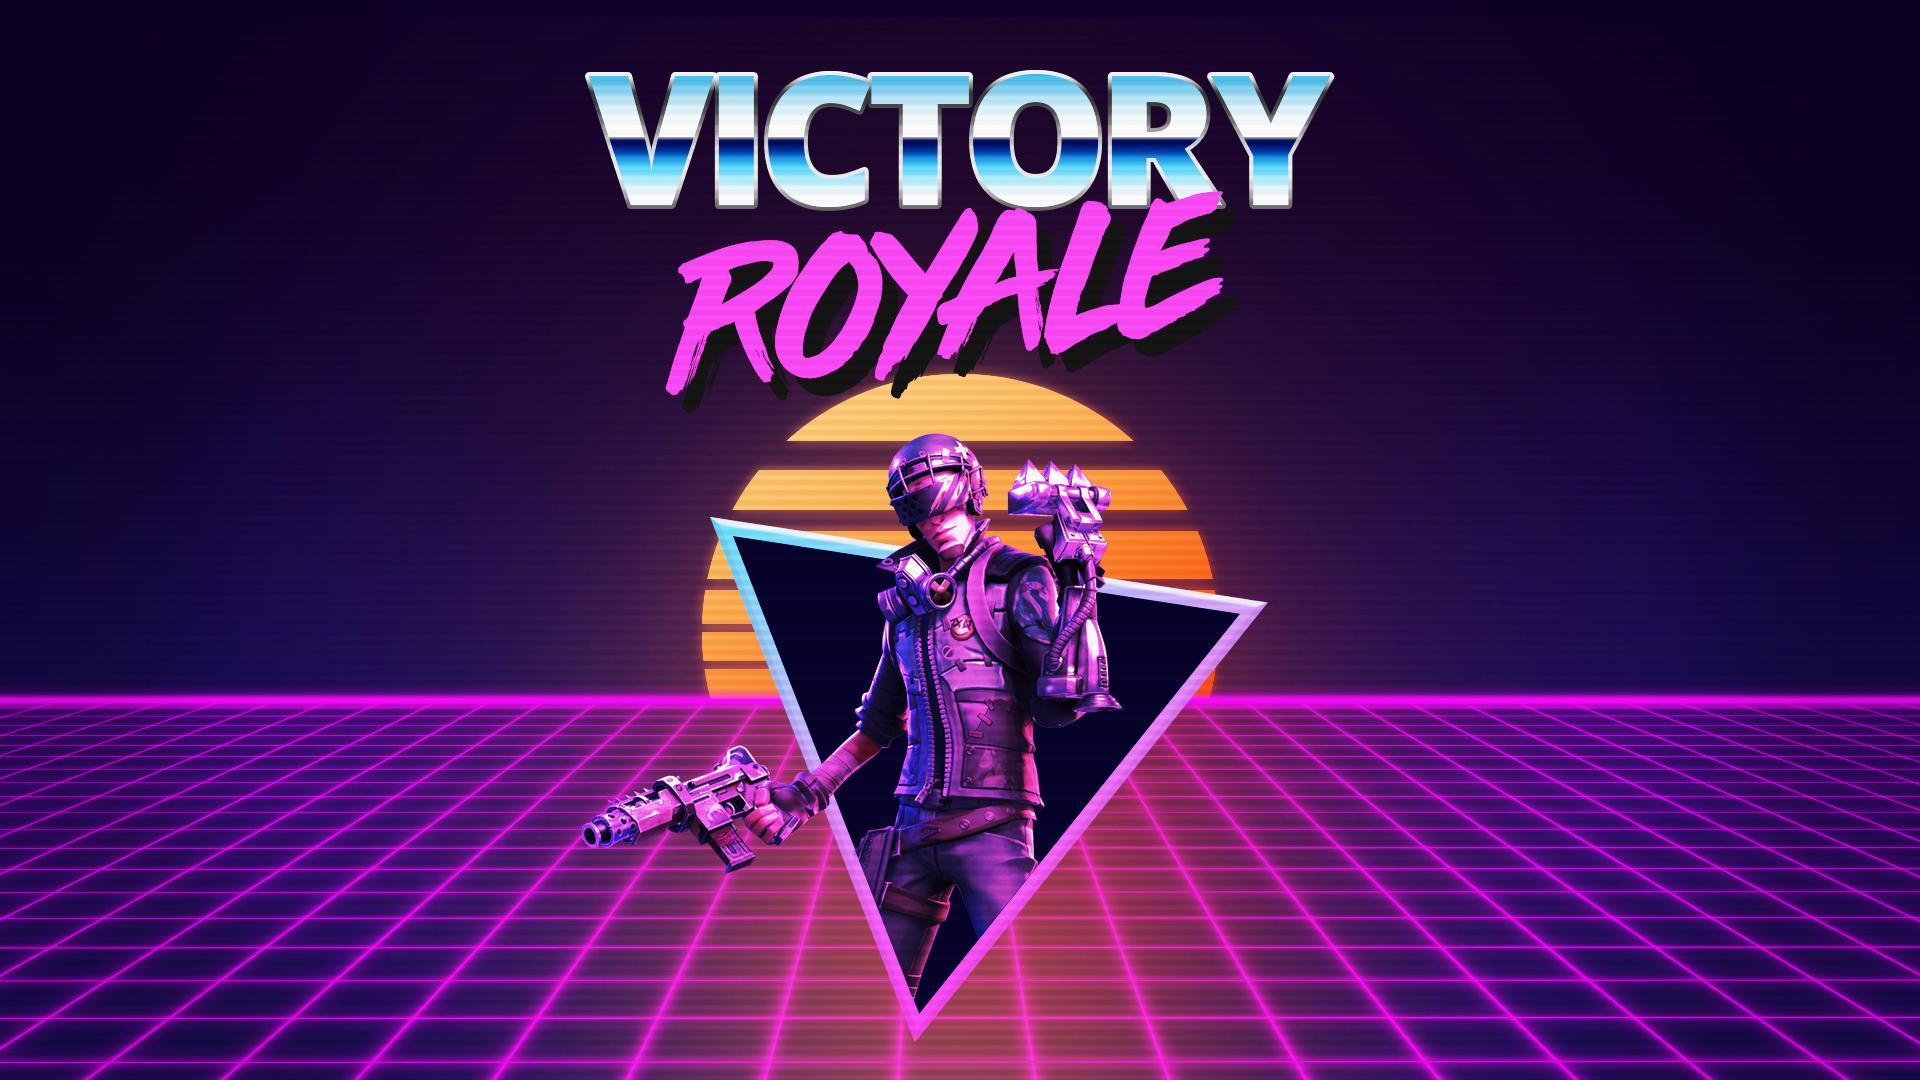 Victory royale - Fortnite